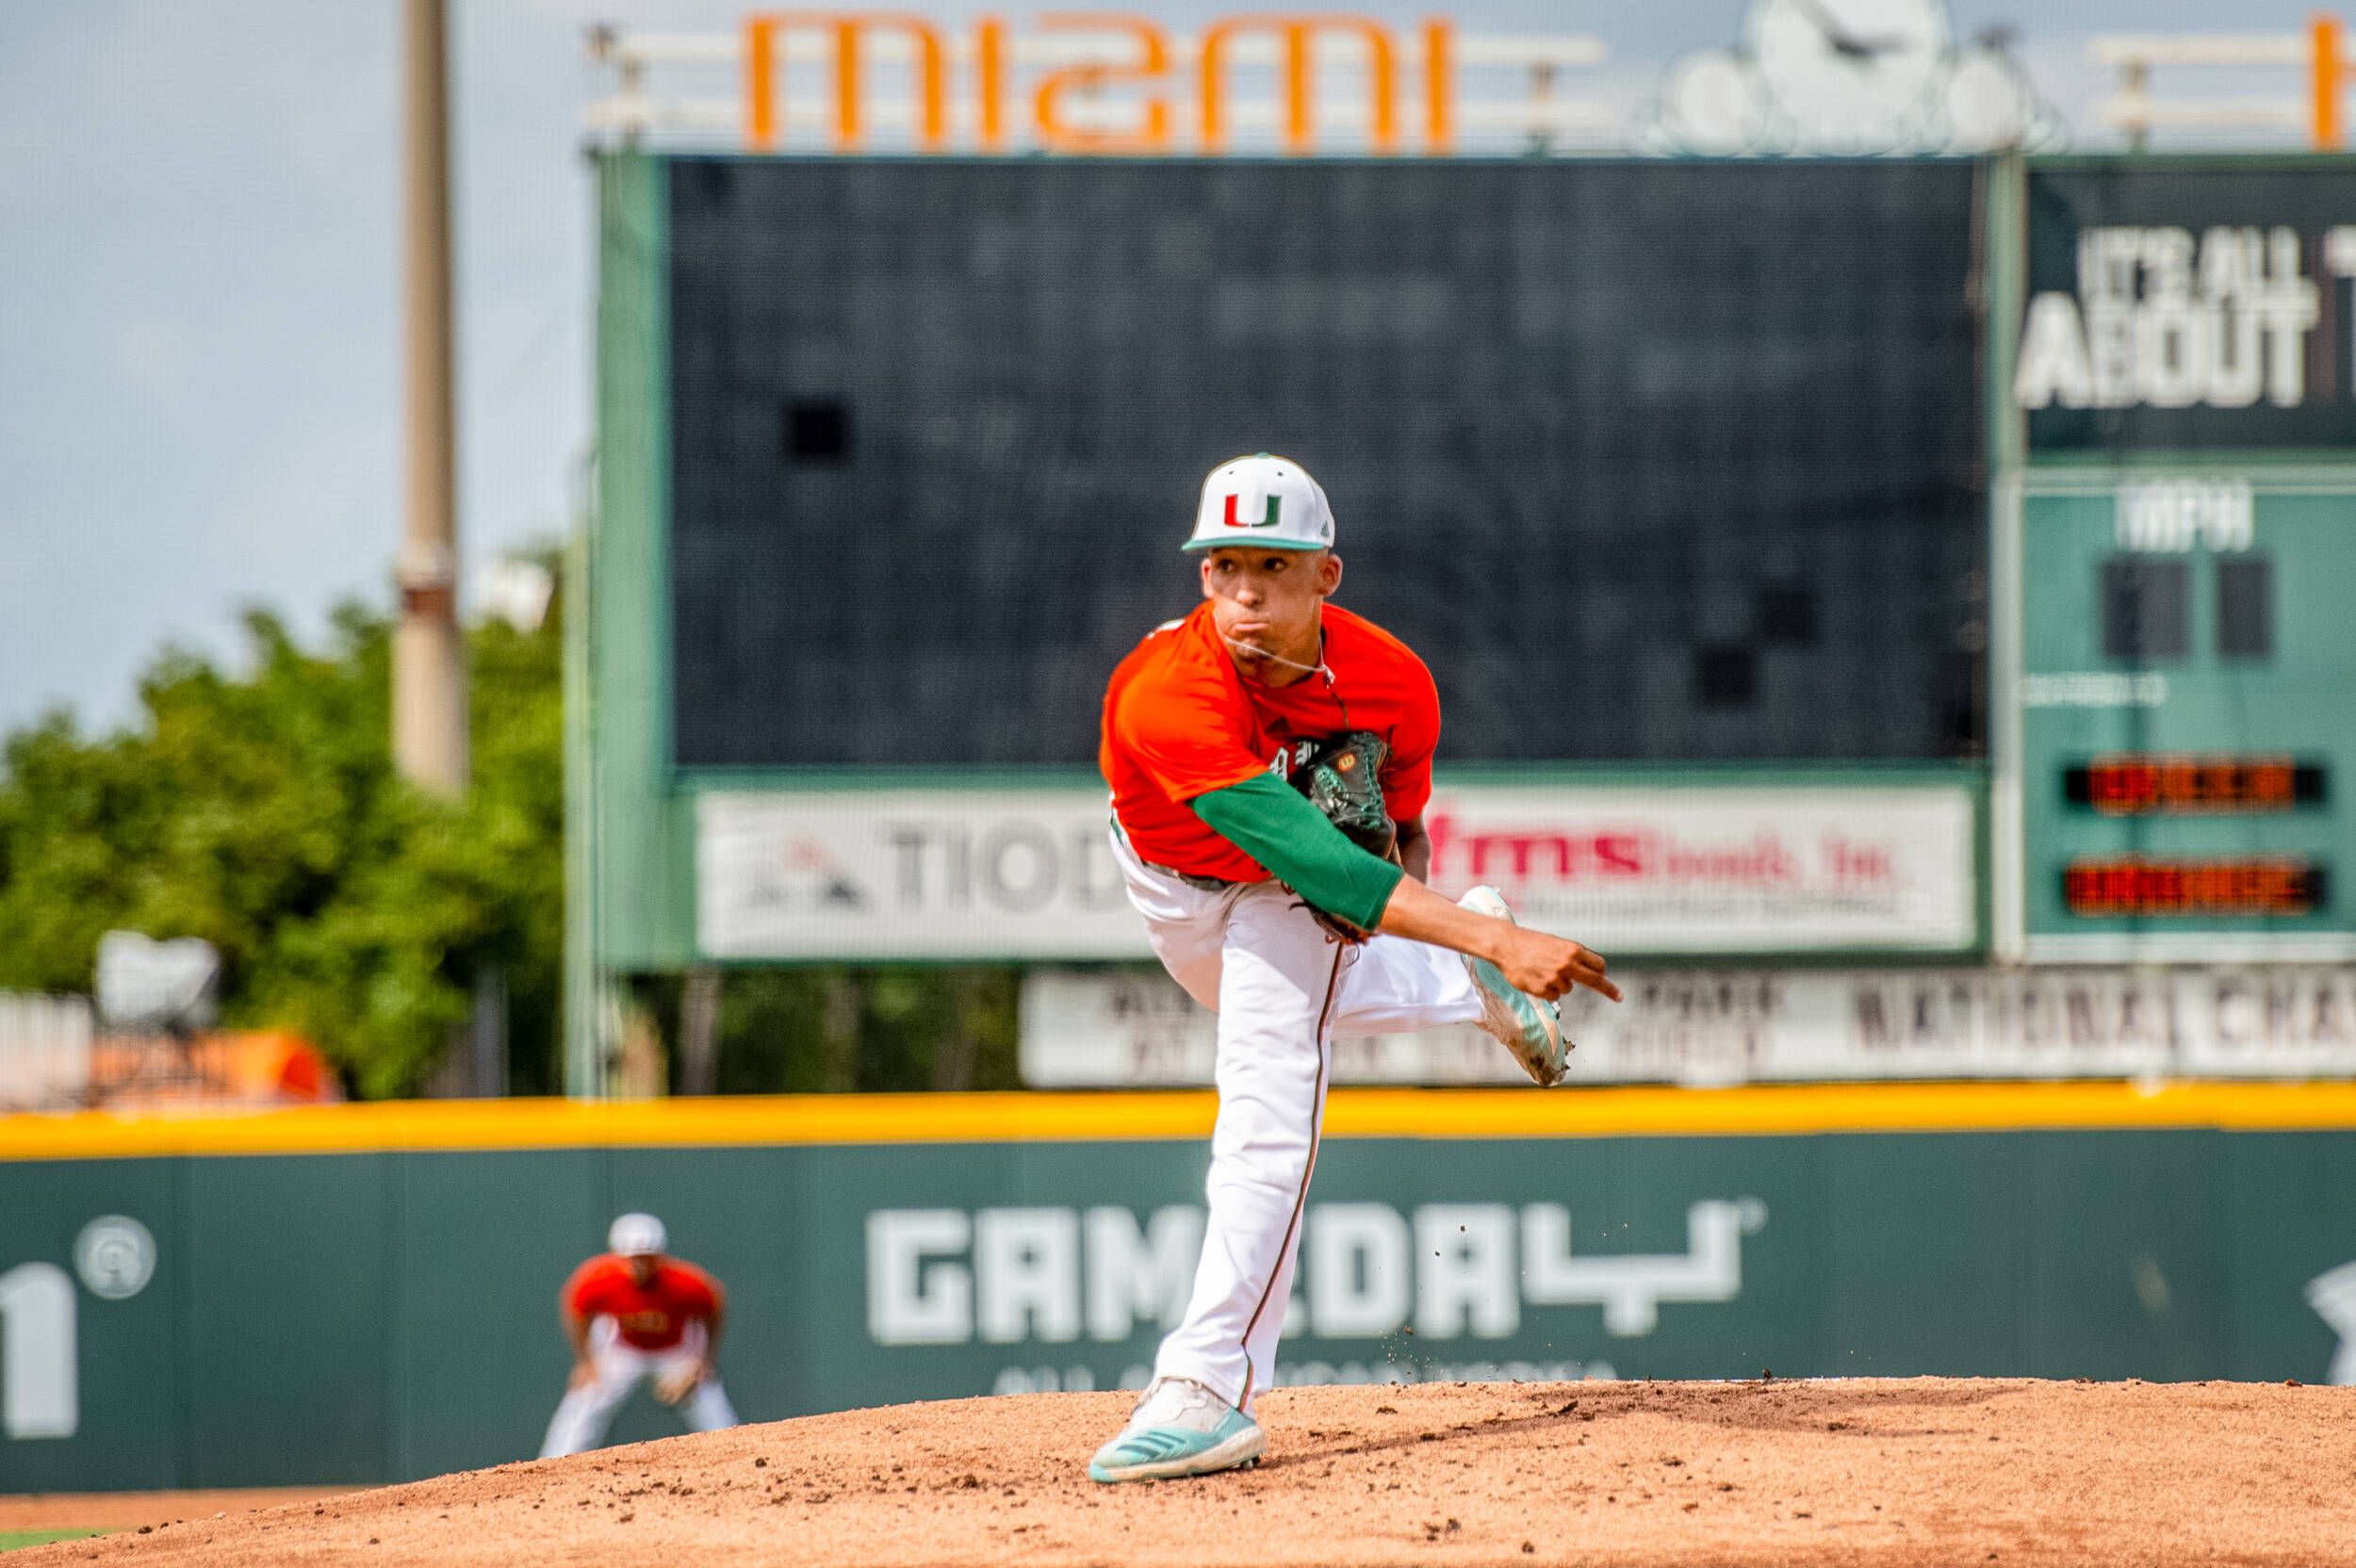 Orange Defeats Green in Annual World Series – University of Miami